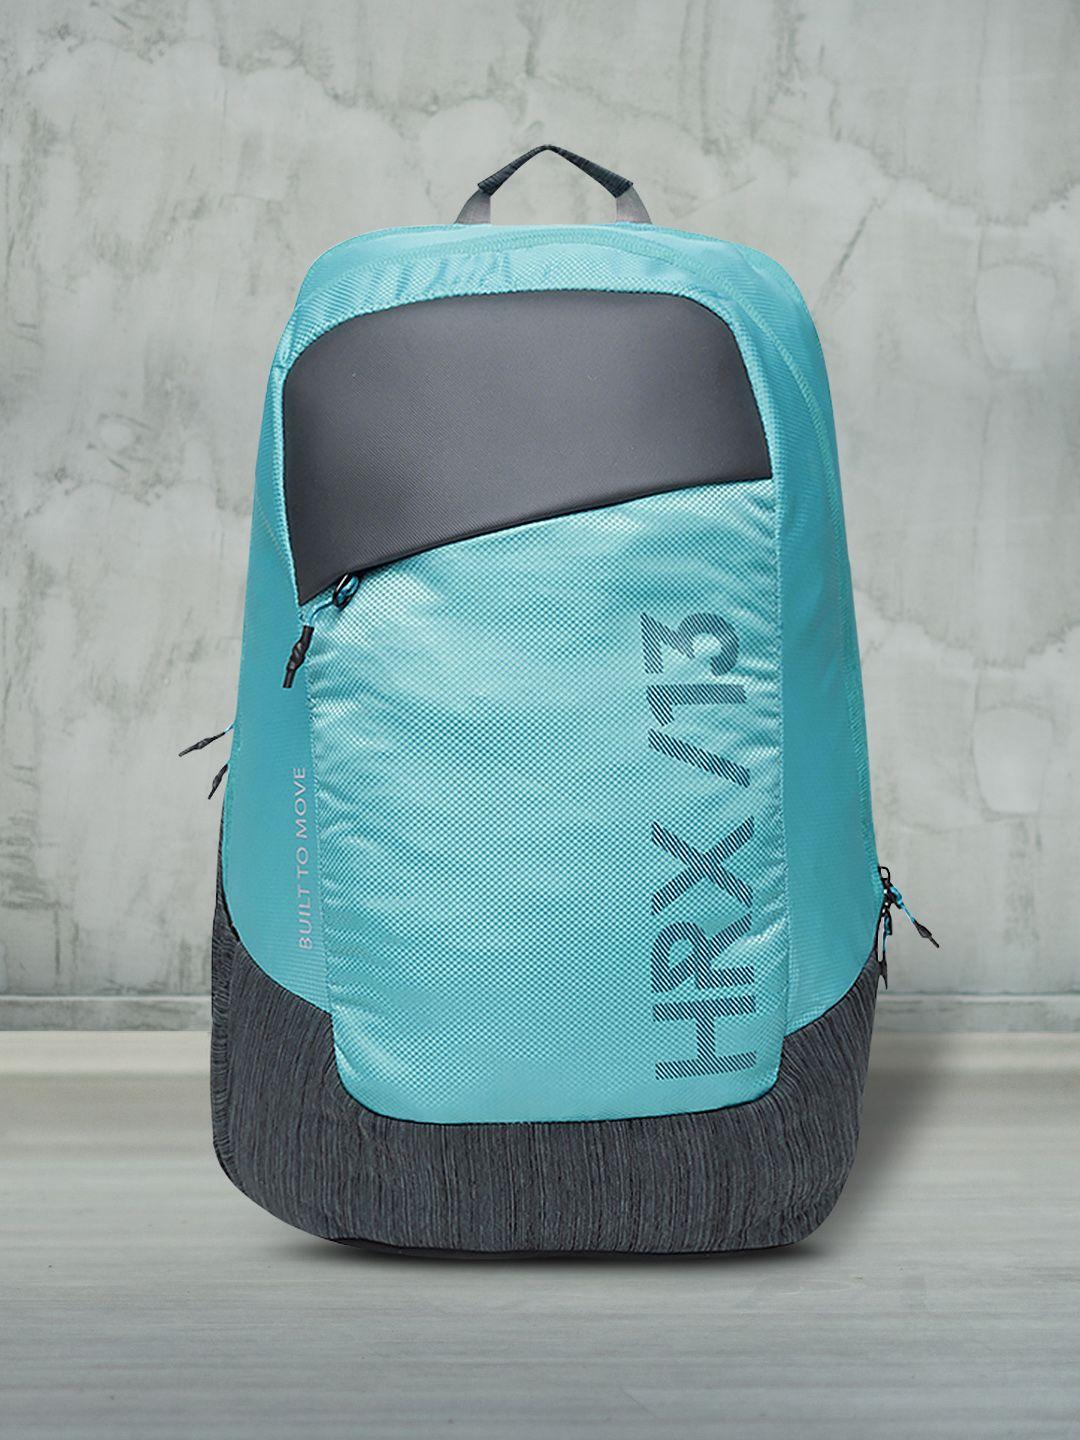 hrx by hrithik roshan unisex blue & grey colourblocked multiutility laptop backpack